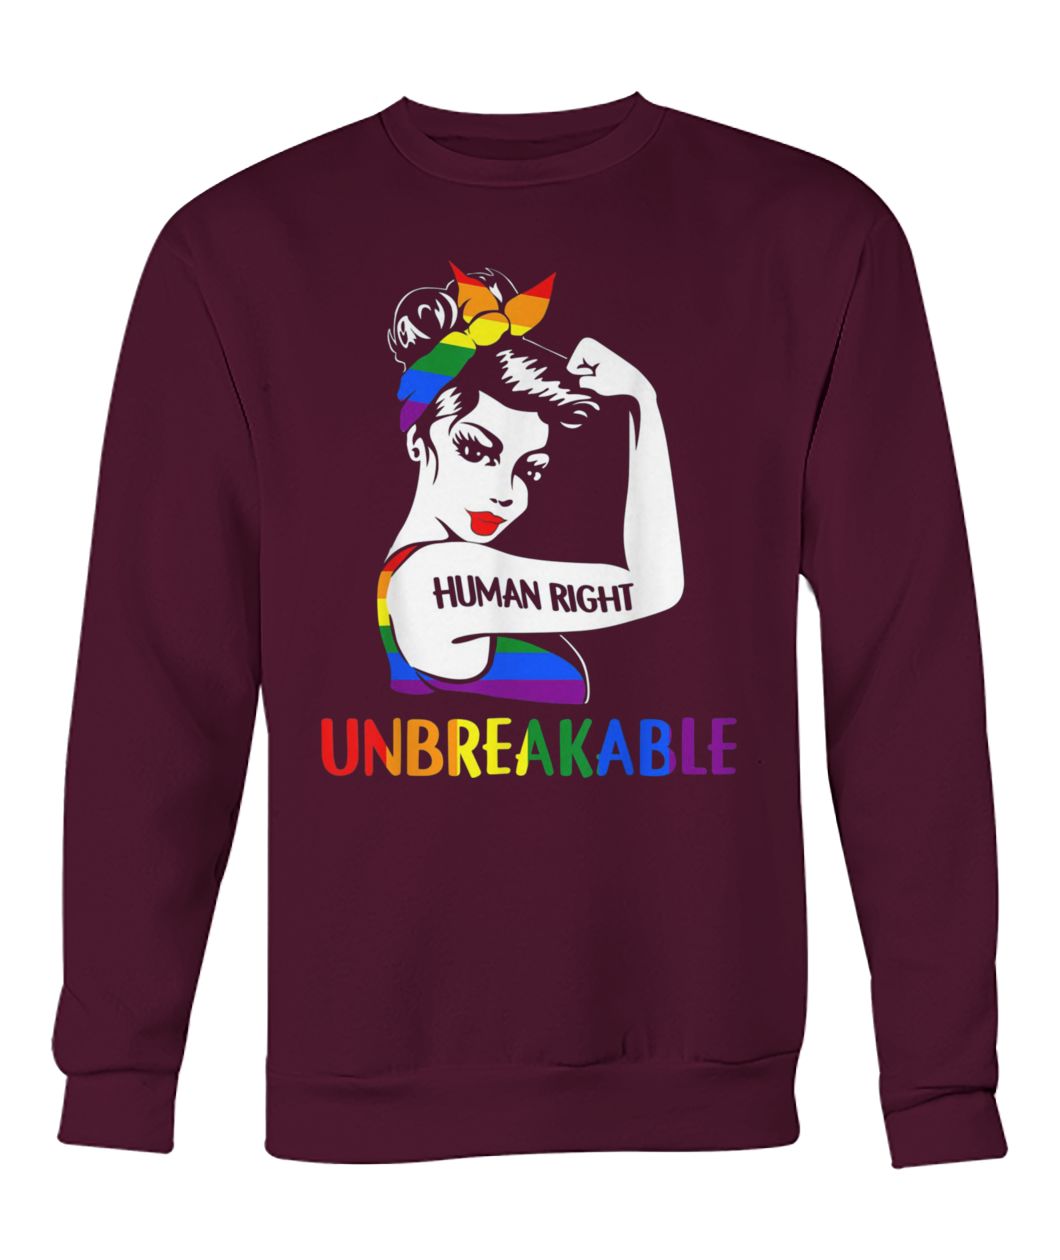 Unbreakable human right gay les pride rainbow crew neck sweatshirt